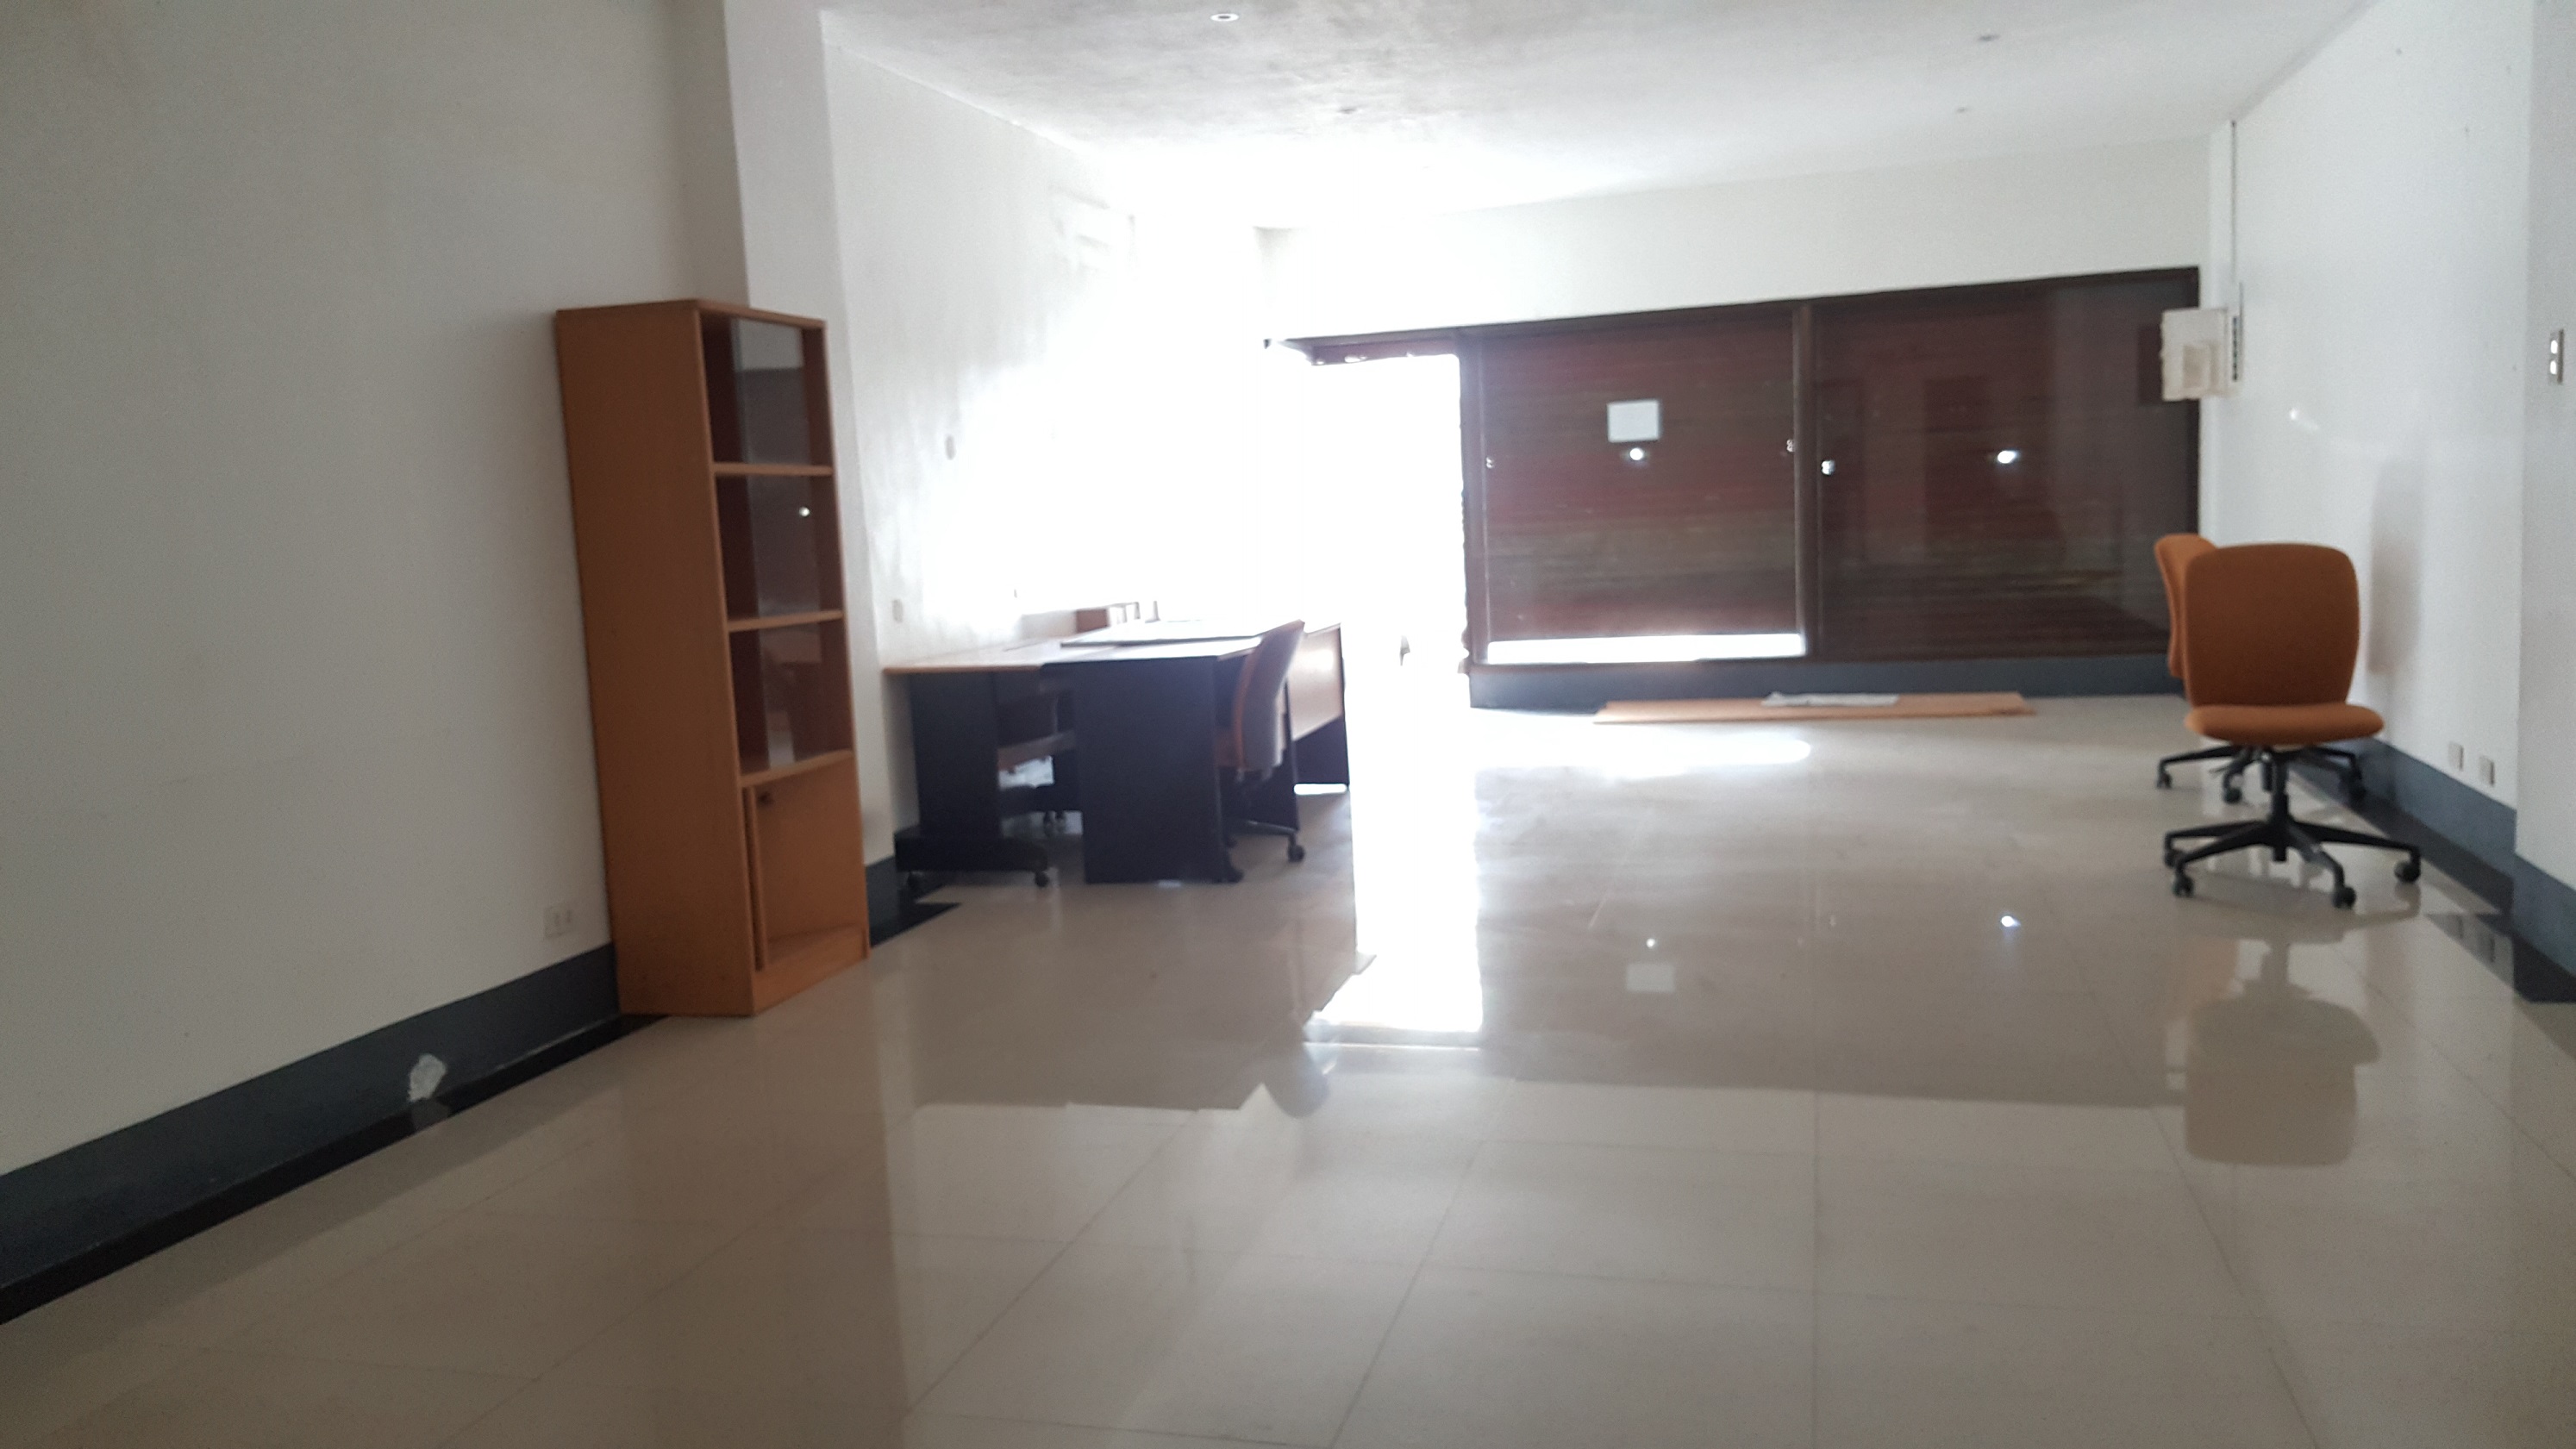 65-square-meters-office-space-in-gorordo-avenue-cebu-city